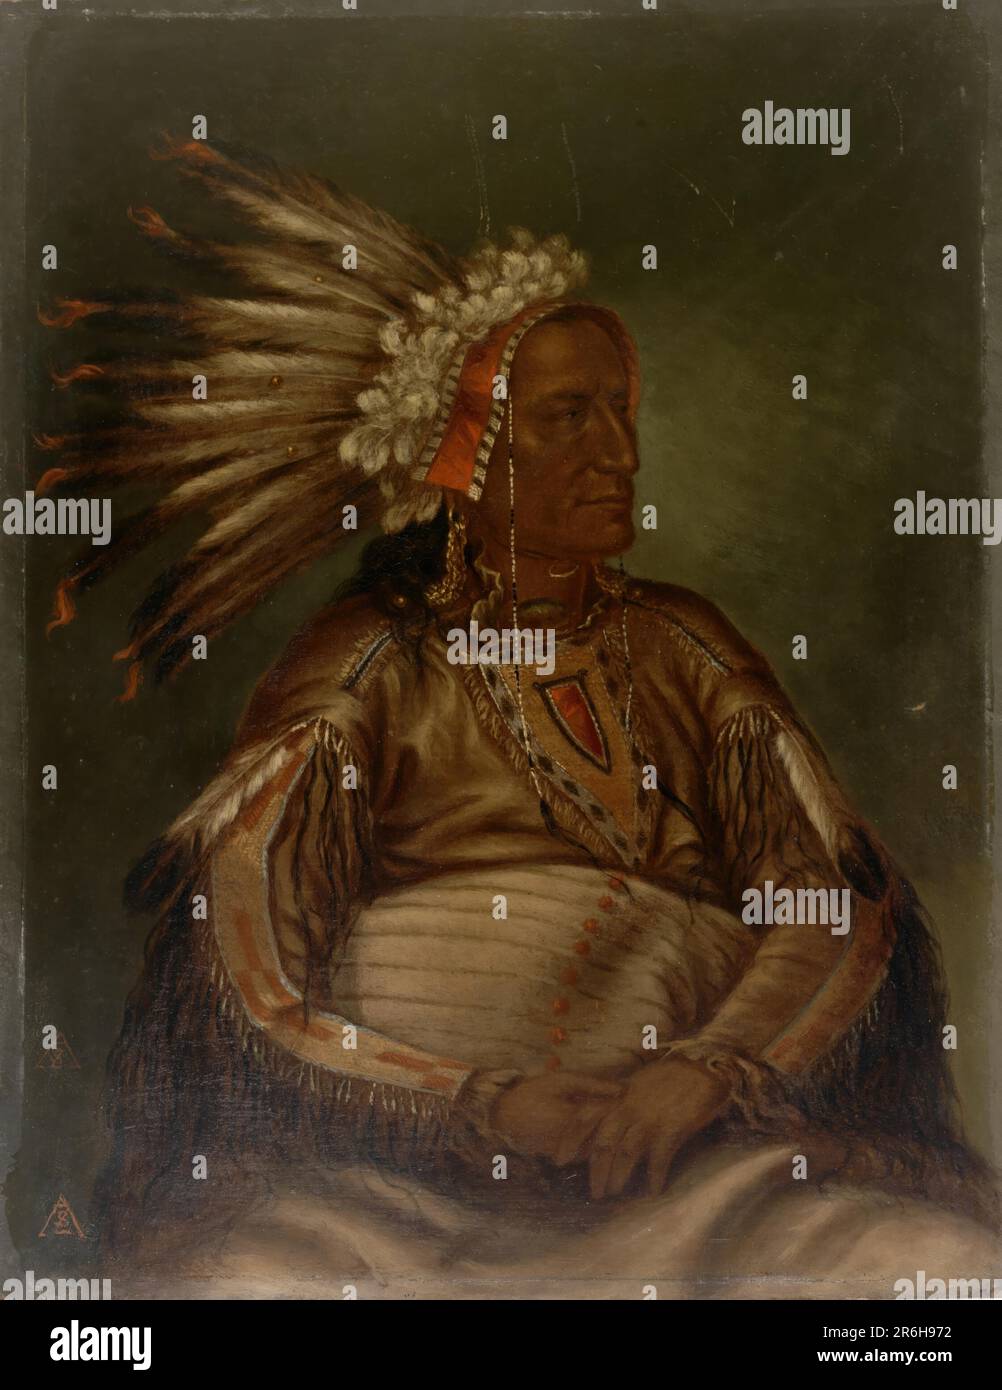 O-mata-ah-luta (Plume Rosso). Data: CA. 1887. Olio su cartone. Museo: Smithsonian American Art Museum. Foto Stock